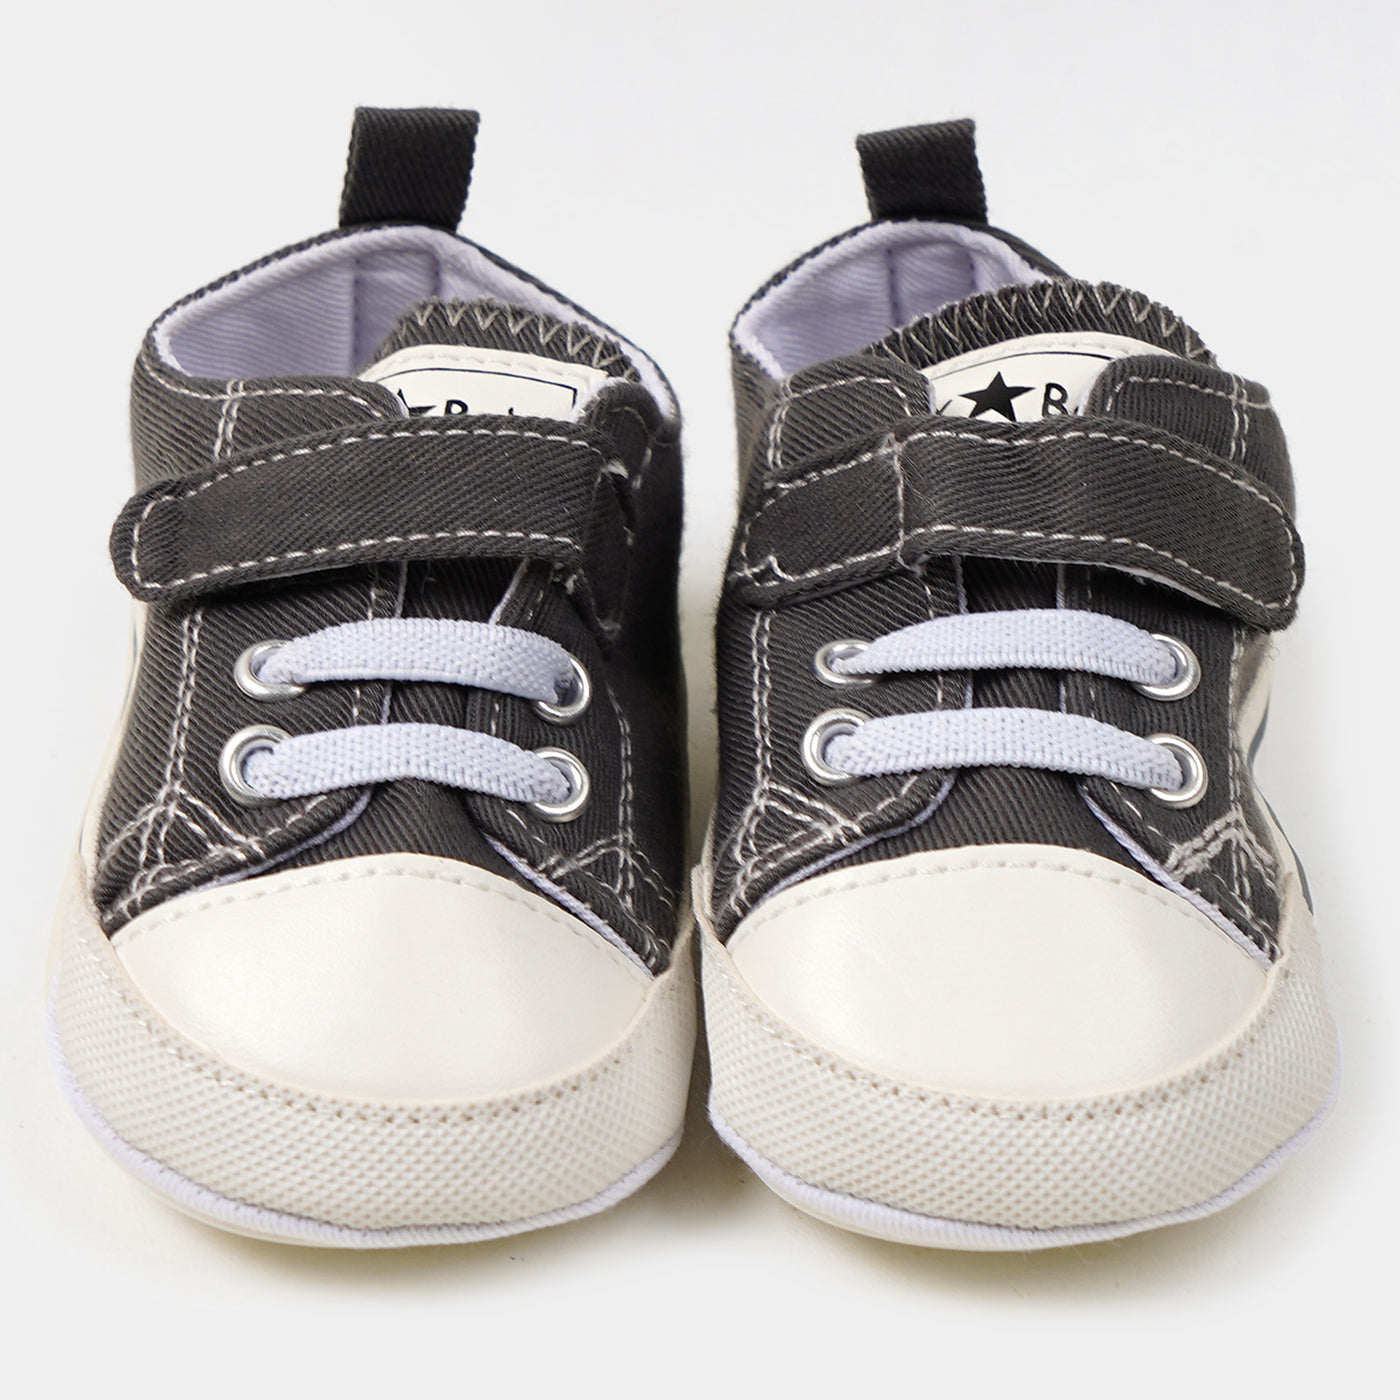 Infant Baby Boys Shoes Soft & Fashionable